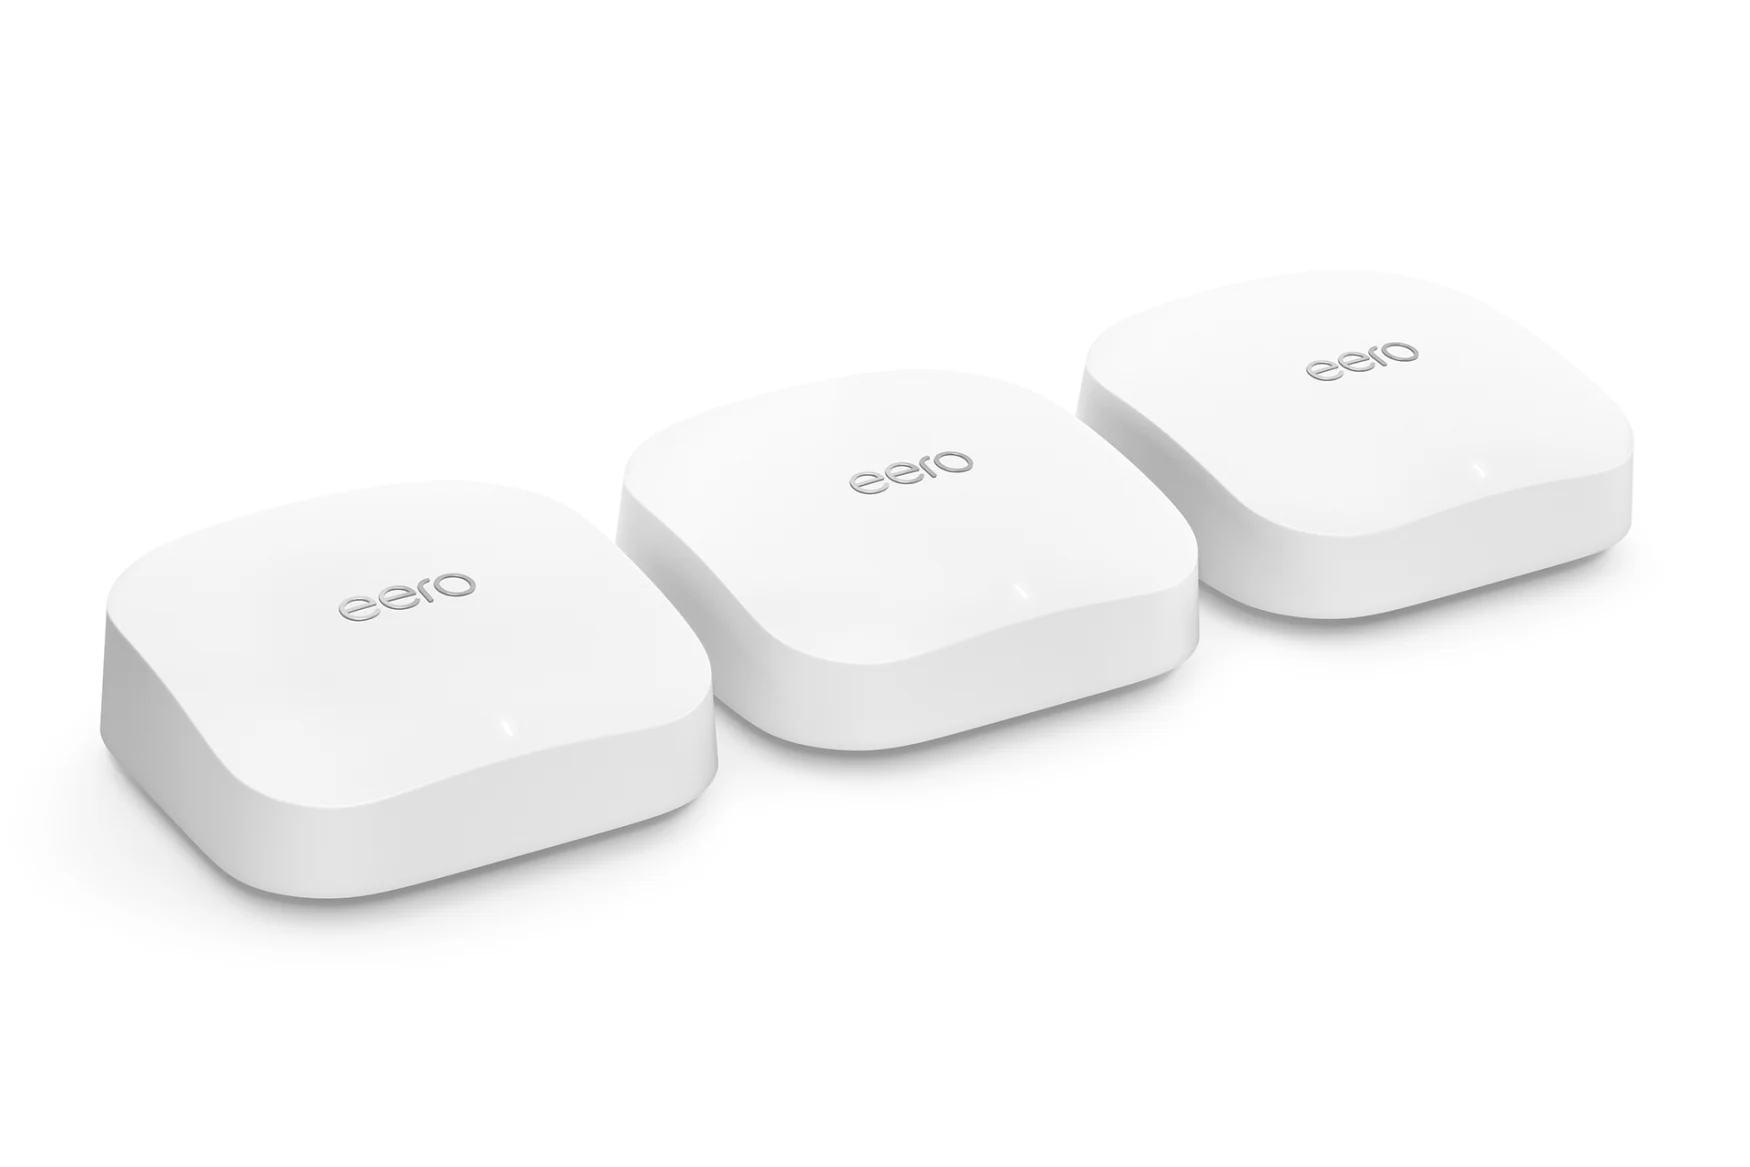 Eero Pro 6E WiFi mesh router